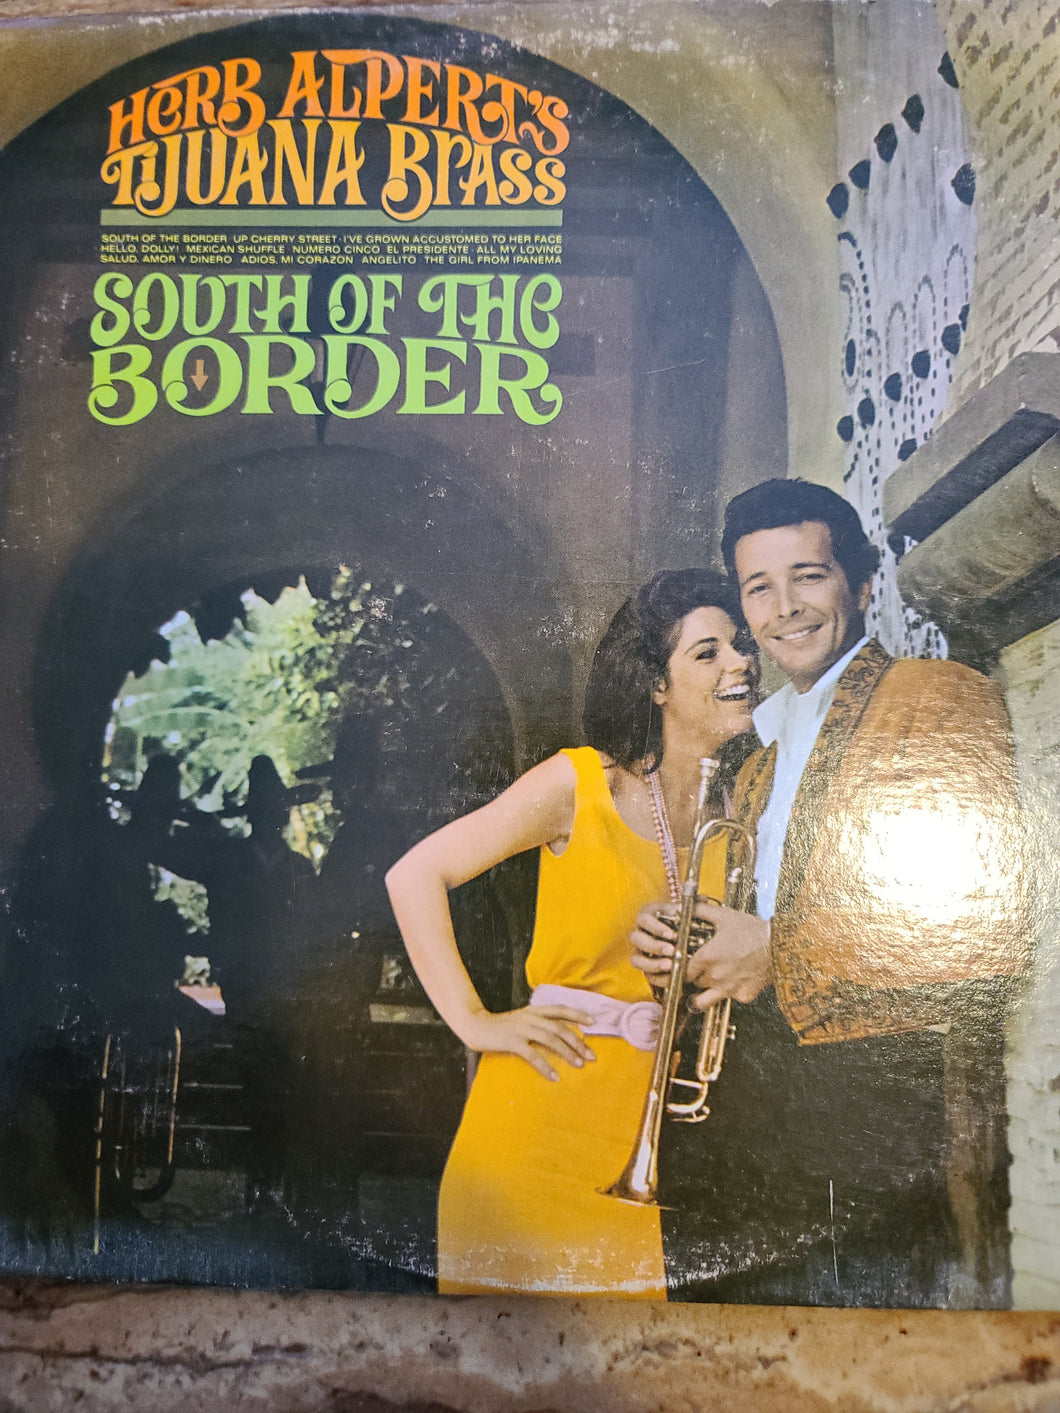 Herb Albert's Tijuana Brass South of the Border